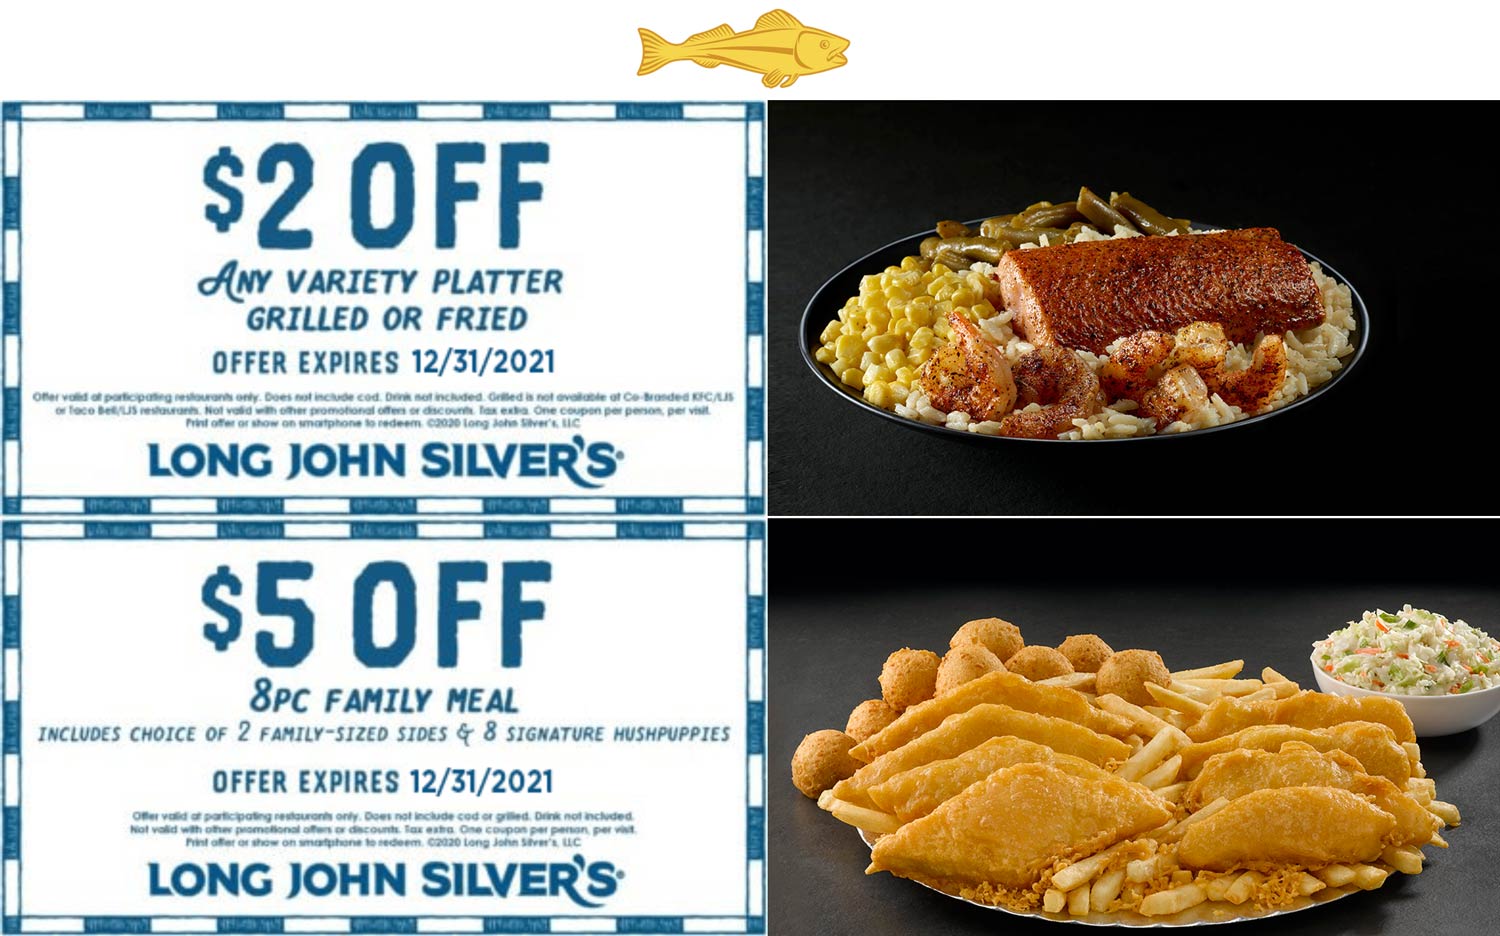 Long John Silvers restaurants Coupon  $2 off any platter & $5 off 8pc meal at Long John Silvers #longjohnsilvers 